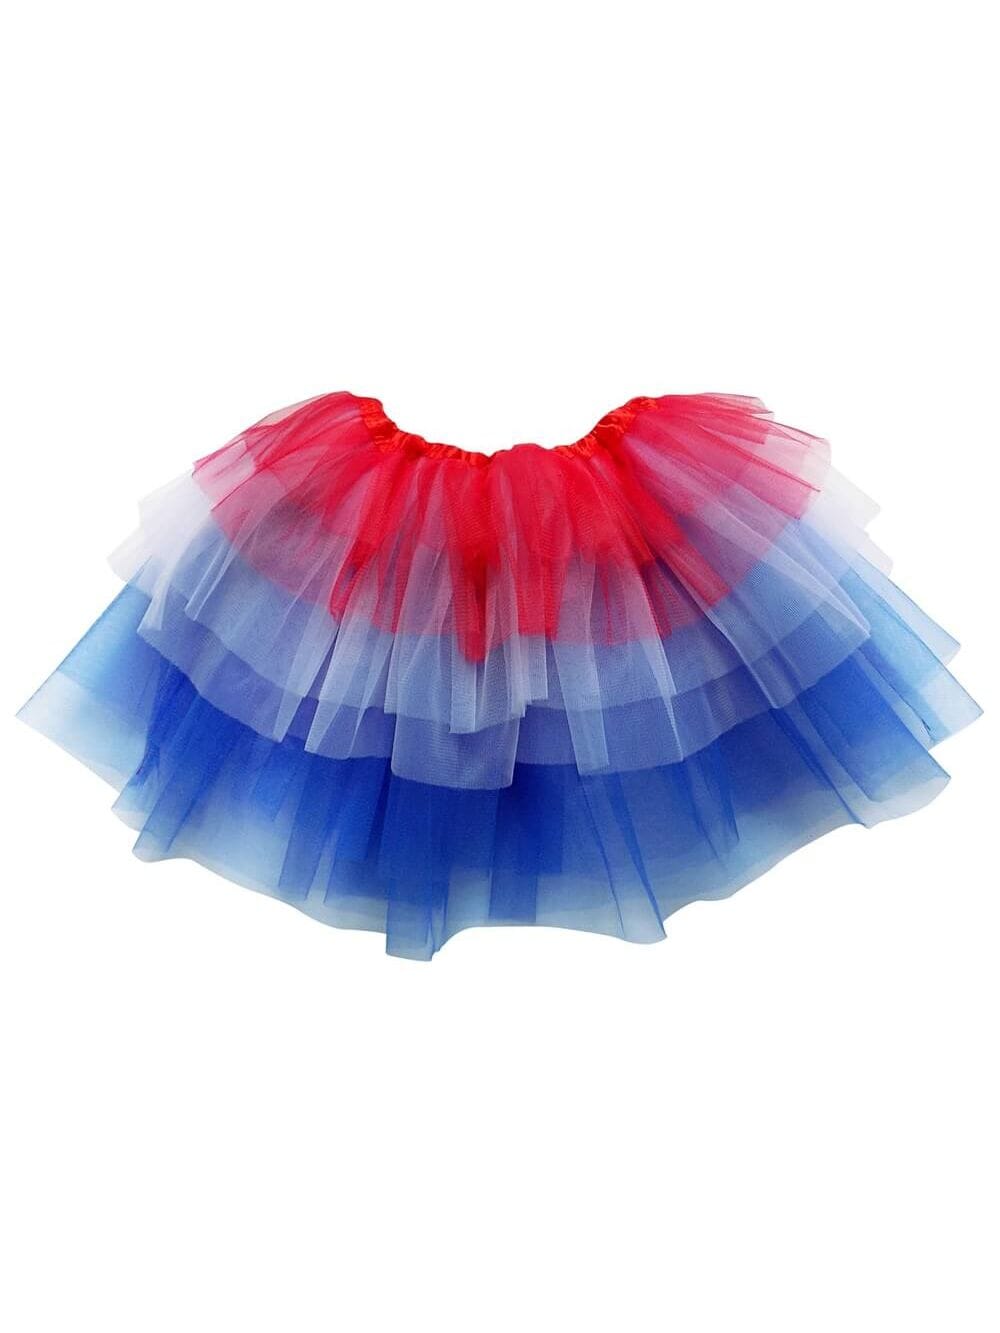 Red, White, Blue 6 Layer Tutu Skirt Patriotic Costume for Girls, Women, Plus - Sydney So Sweet